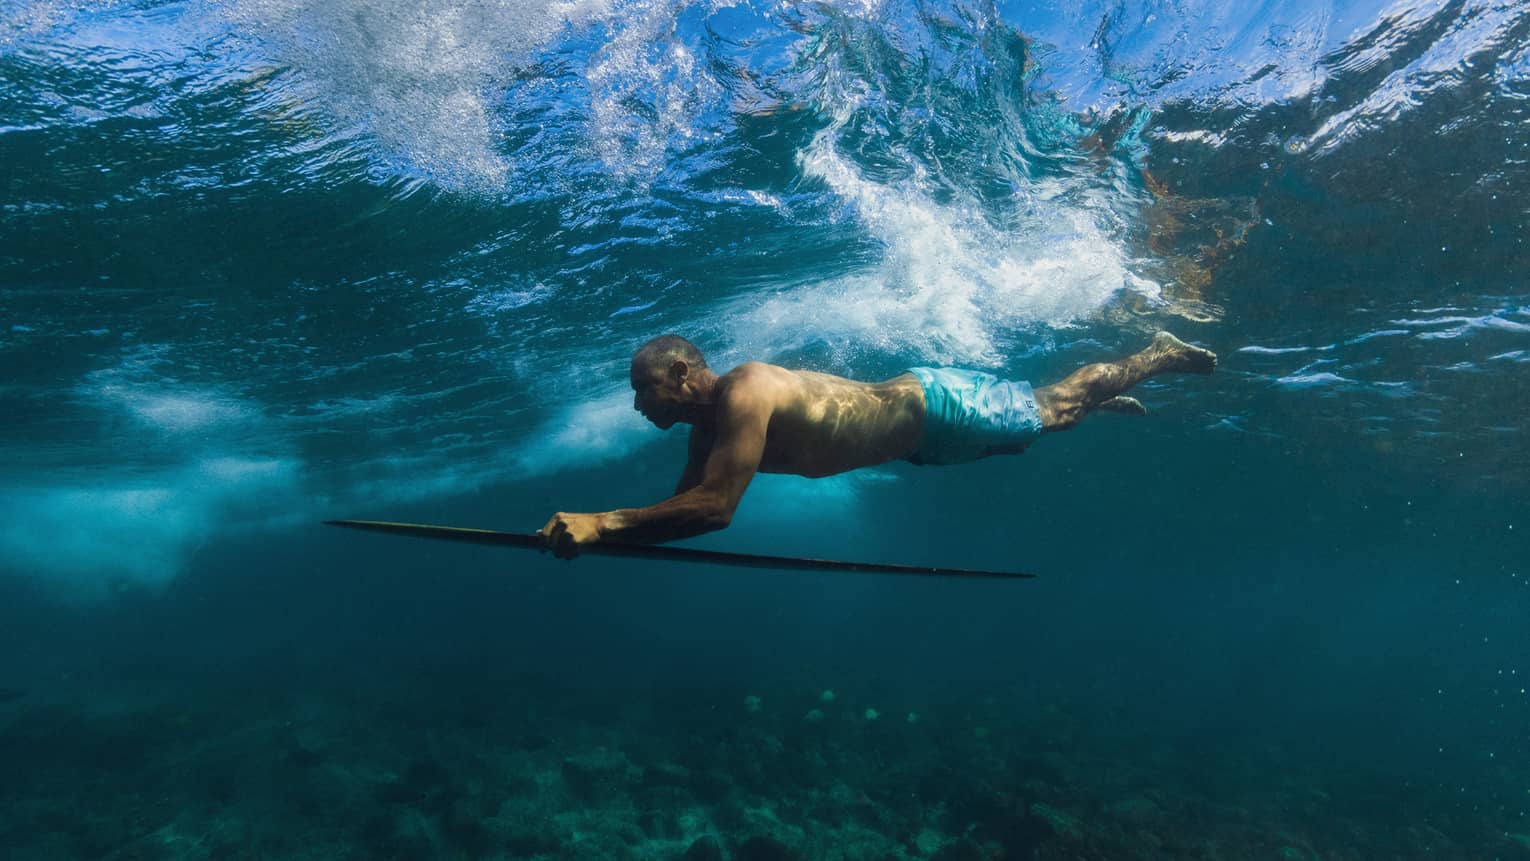 Surfboard designer Bonga Perkins dives under the water on a wooden surfboard